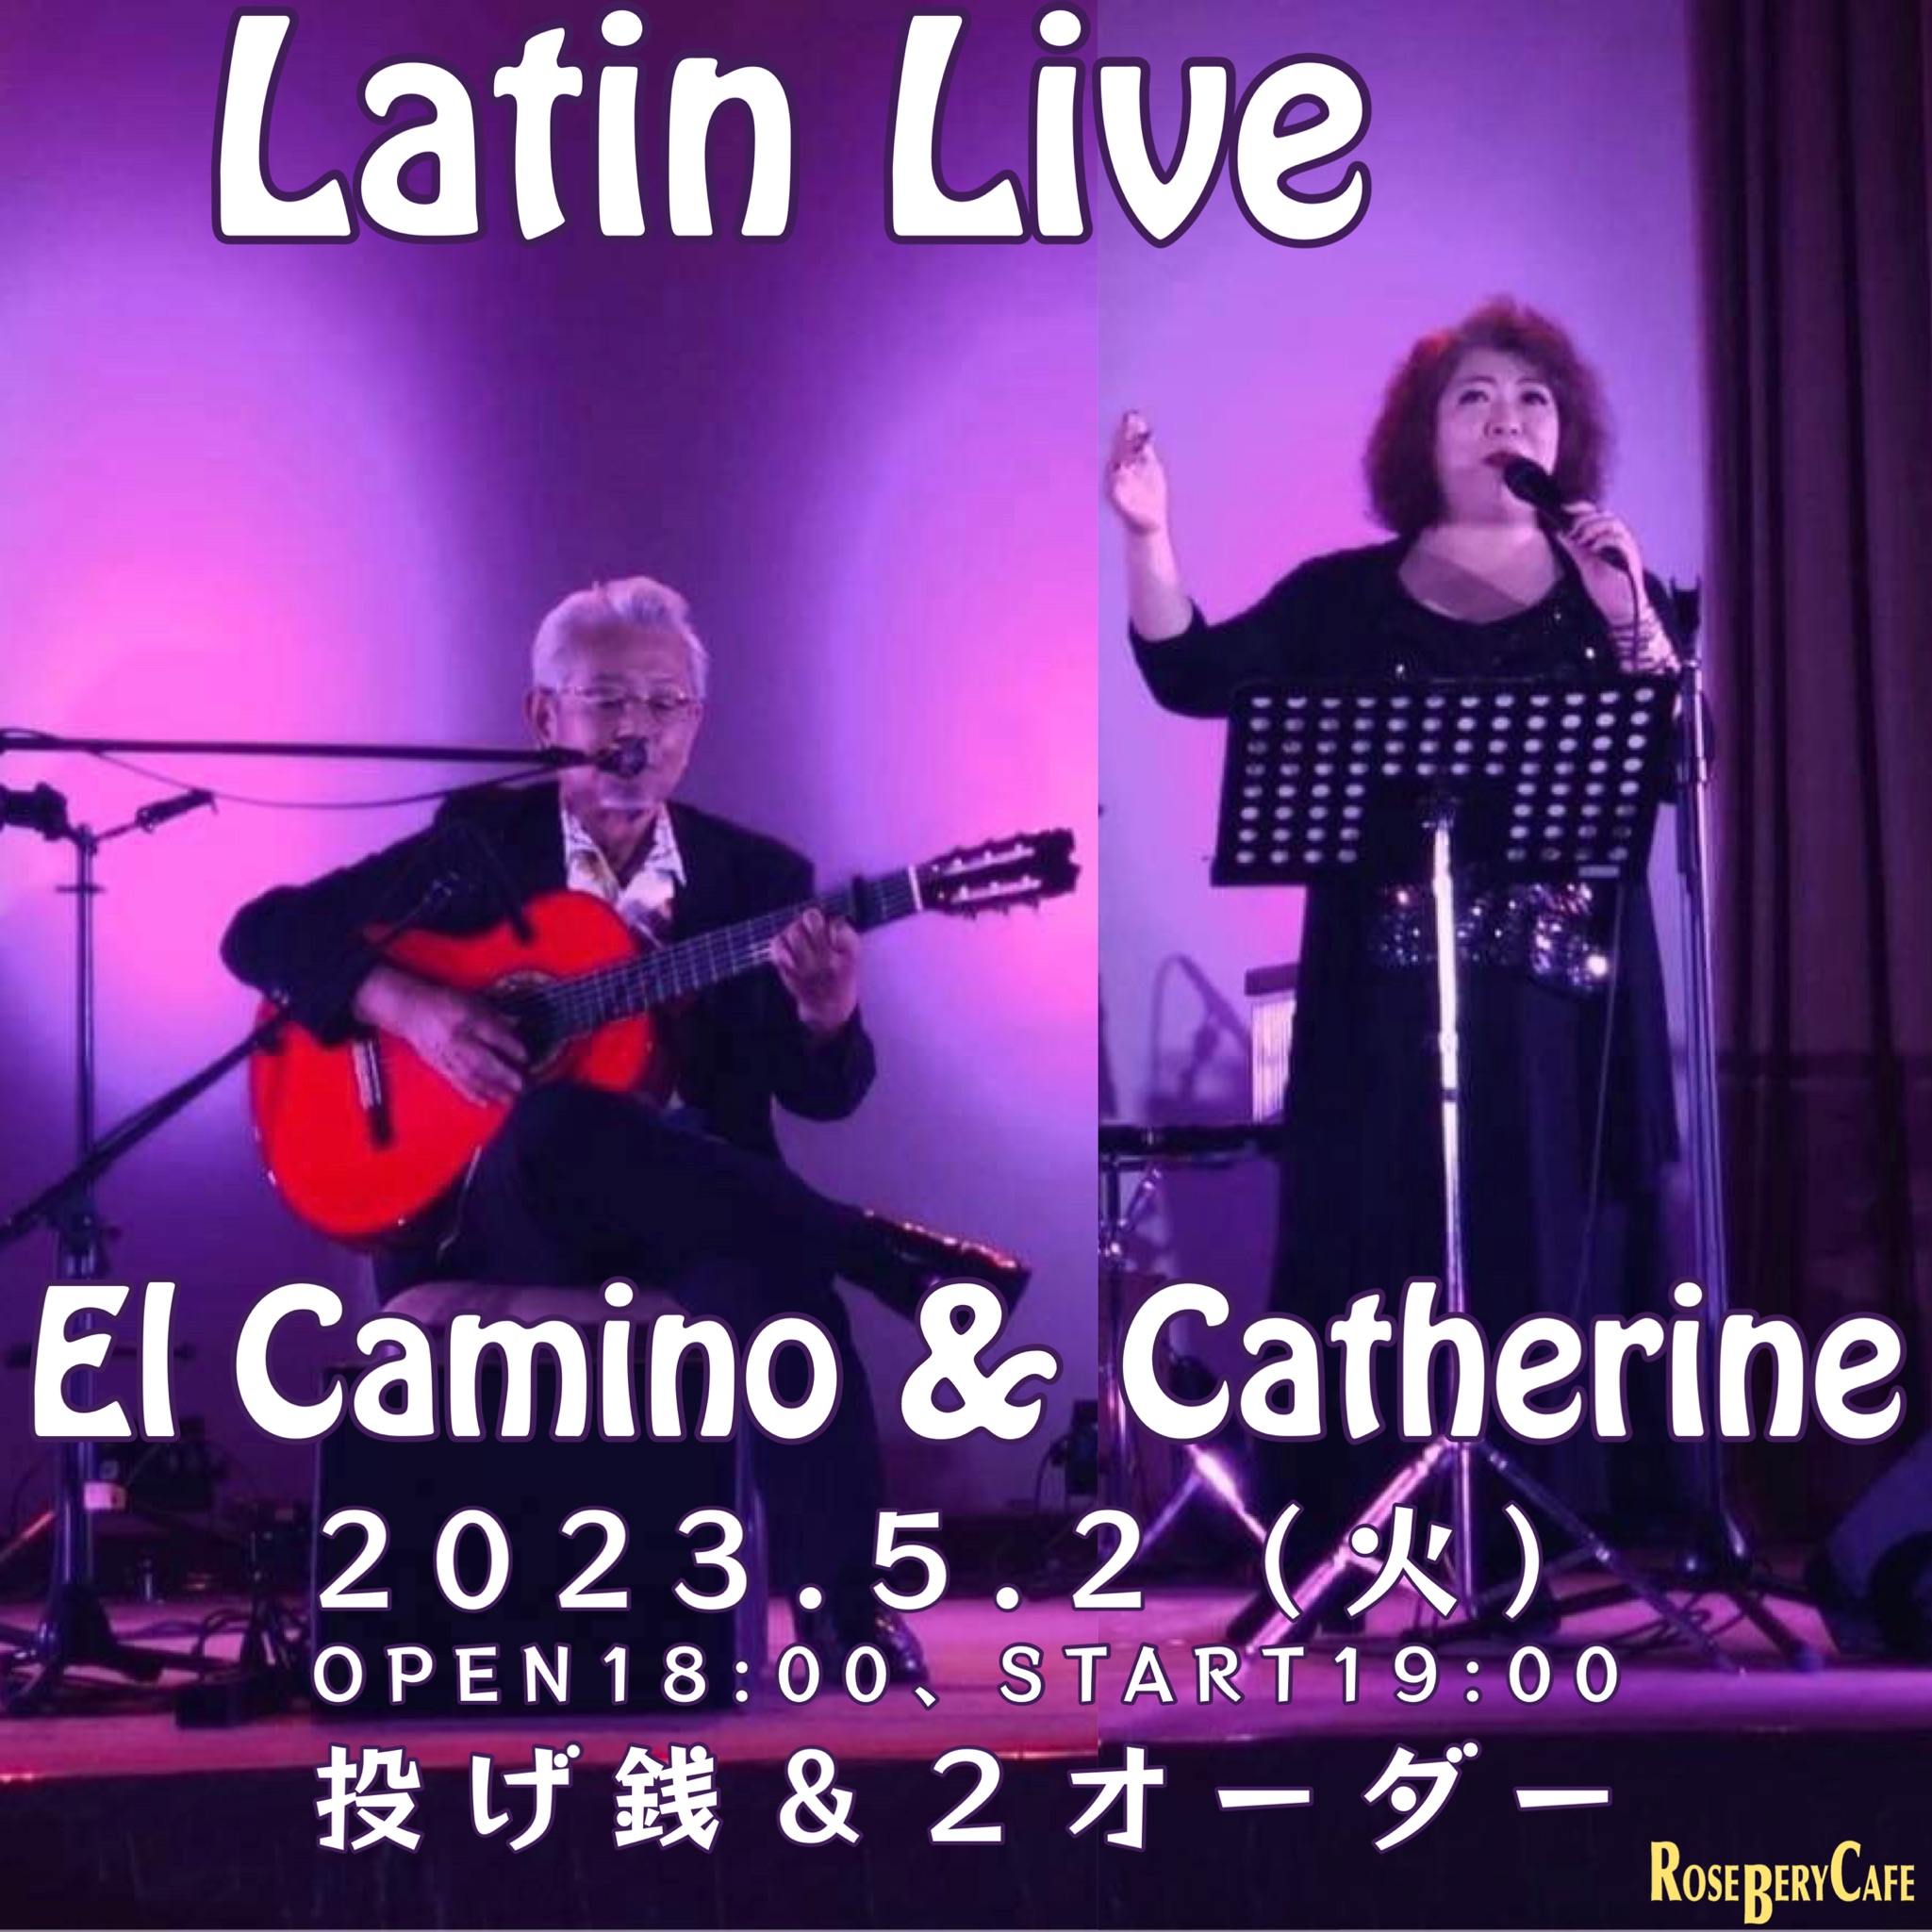 El Camino & Catherine  Latin Live